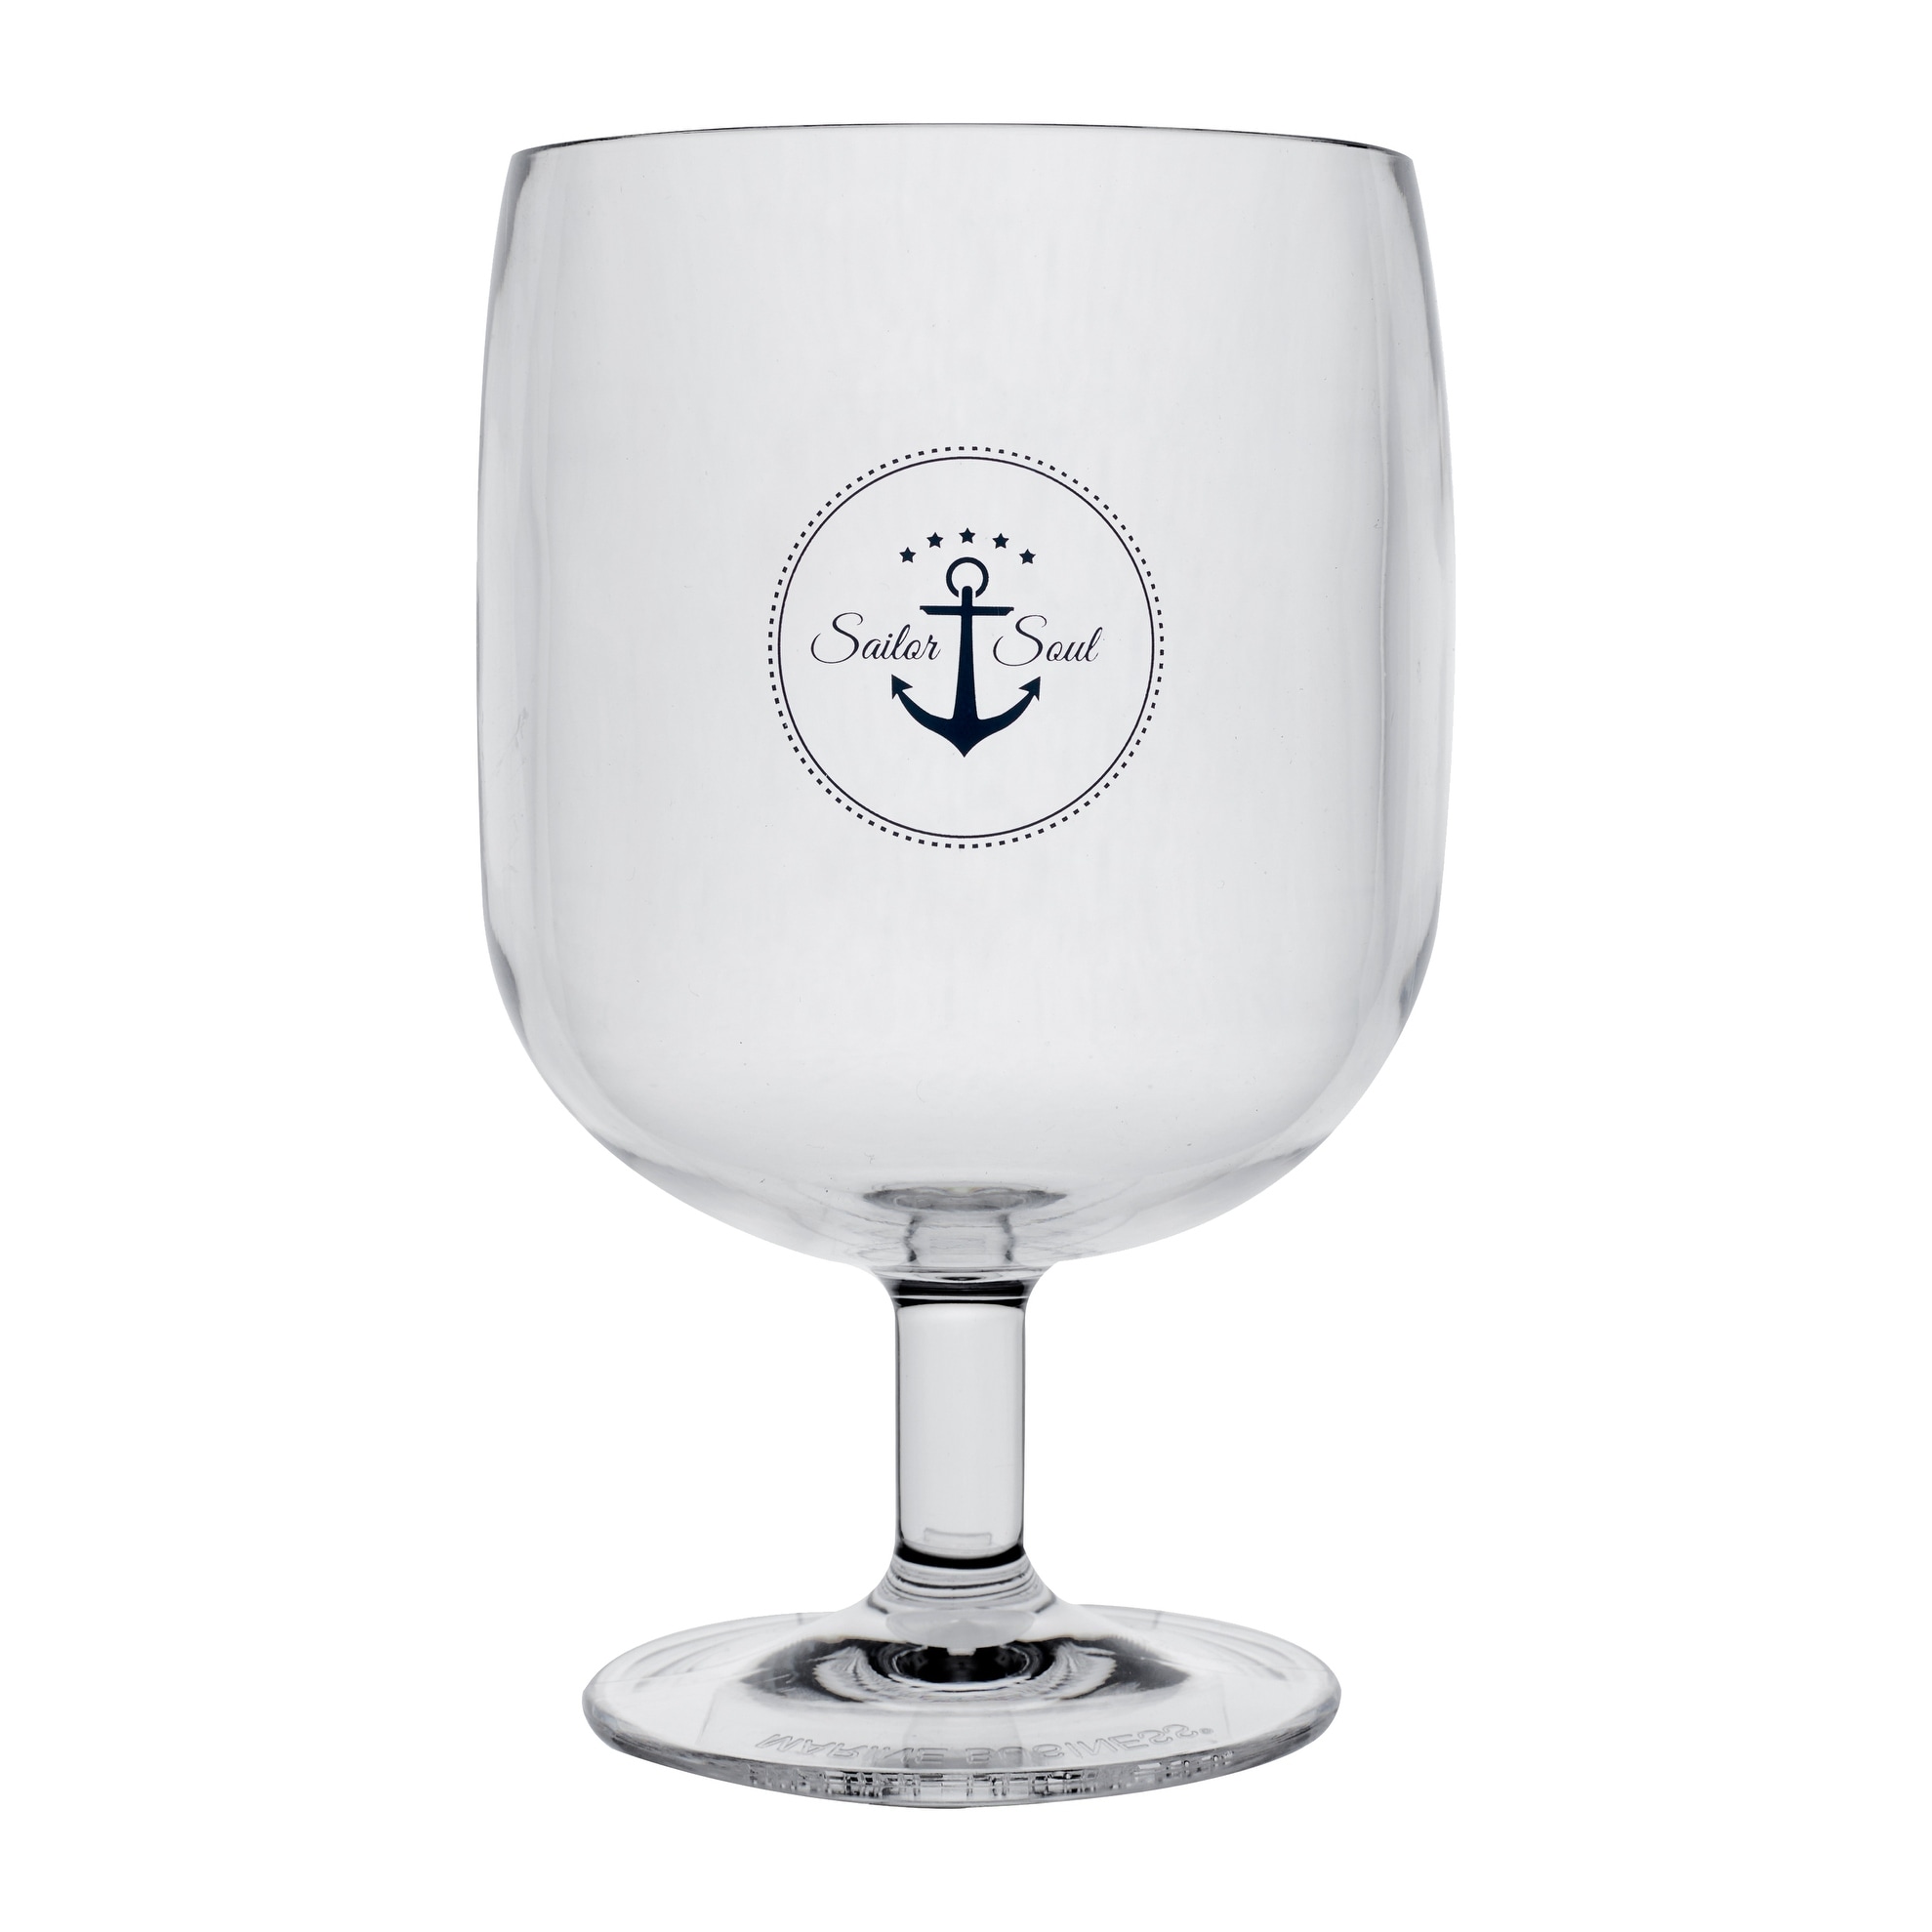 https://ak1.ostkcdn.com/images/products/is/images/direct/7a132922fecd9da8c5e599a5d058839bbbef2b2c/Sailor-Soul-Break-Resistant-Stackable-Wine-Glass.jpg